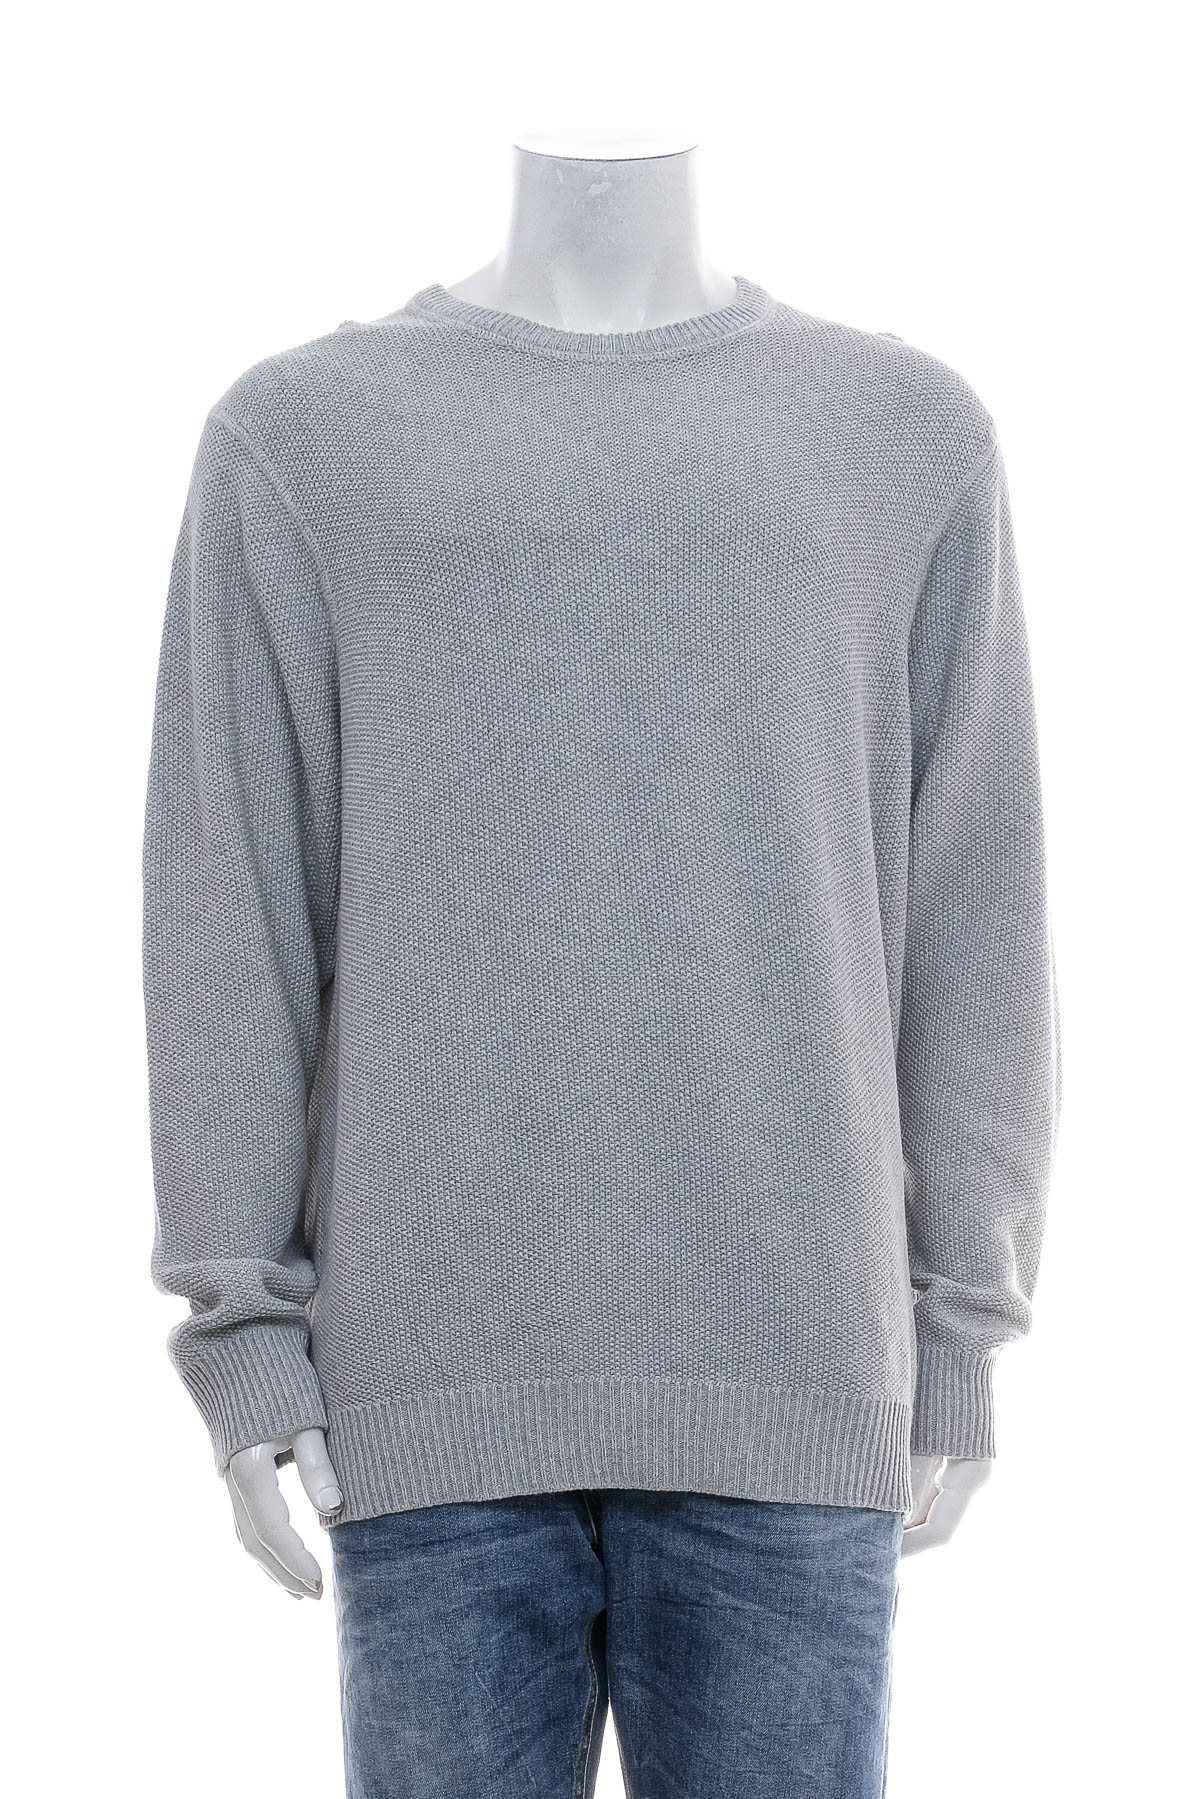 Men's sweater - PRIMARK - 0